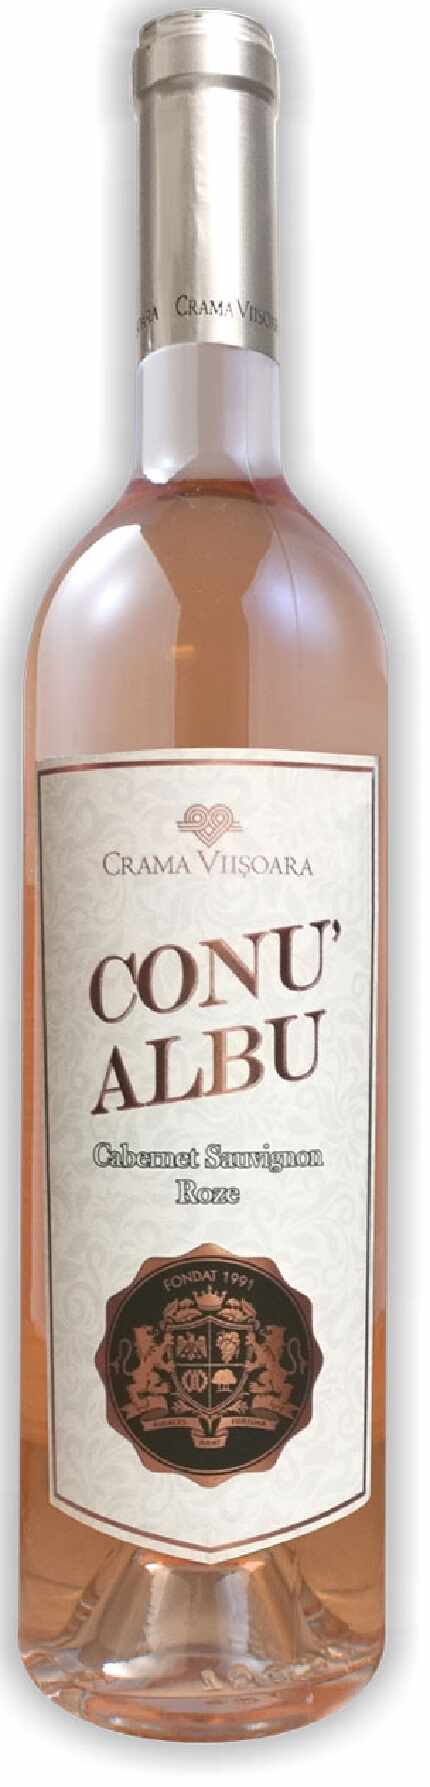 Vin rose - Conu Albu, Cabernet Sauvignon, sec | Crama Viisoara